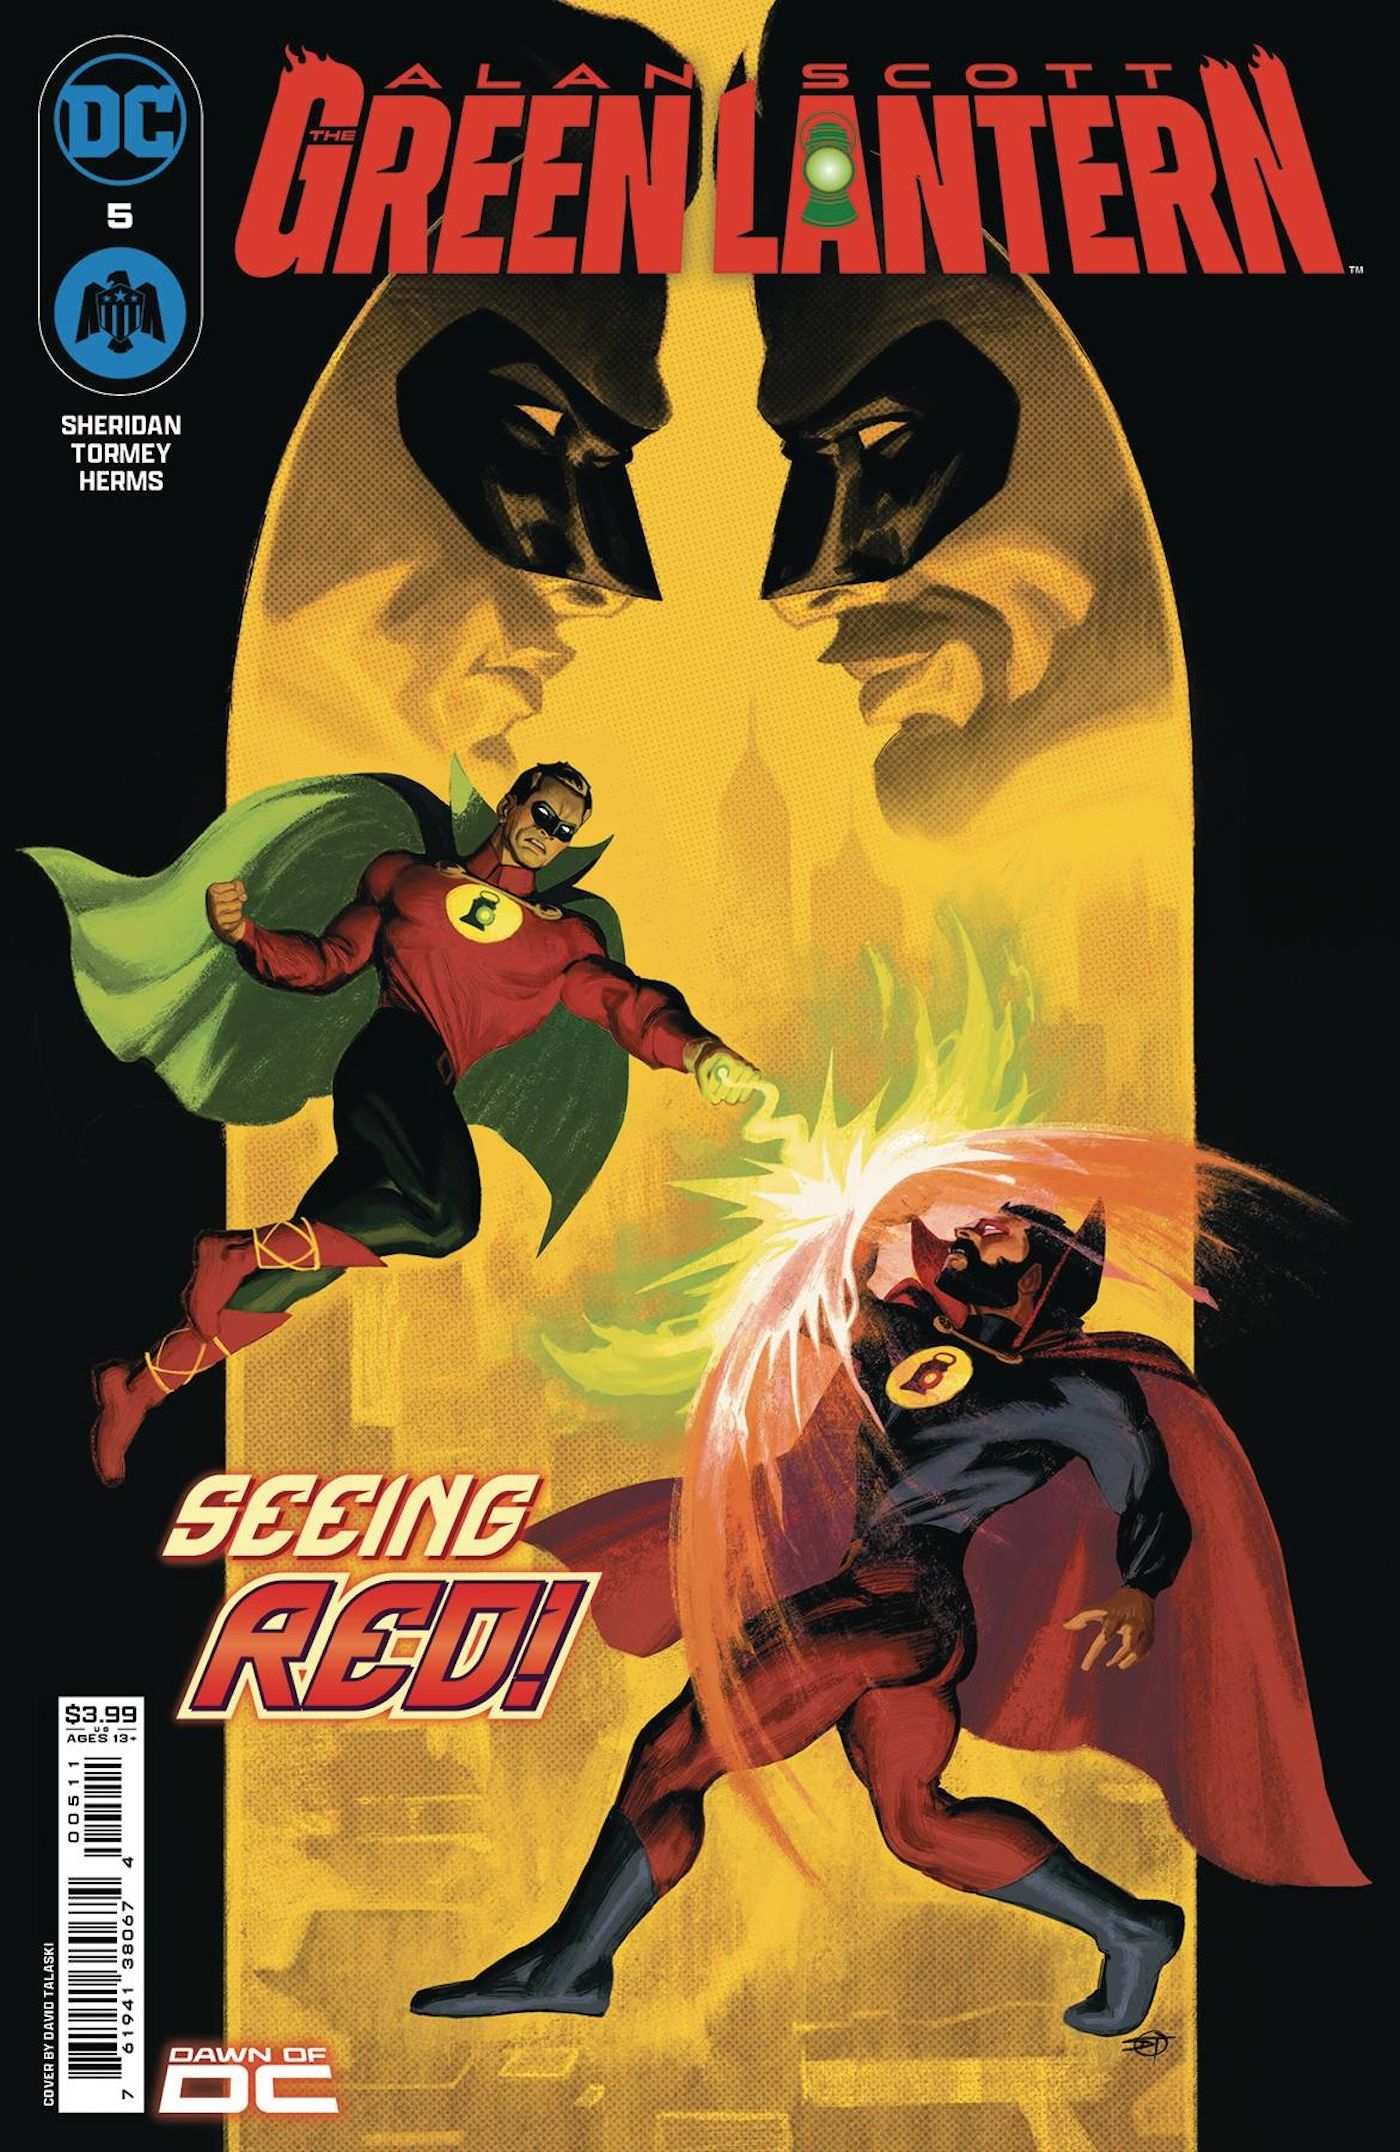 Alan Scott Capa principal do Lanterna Verde 5: Luta entre Lanterna Verde e Lanterna Vermelho.